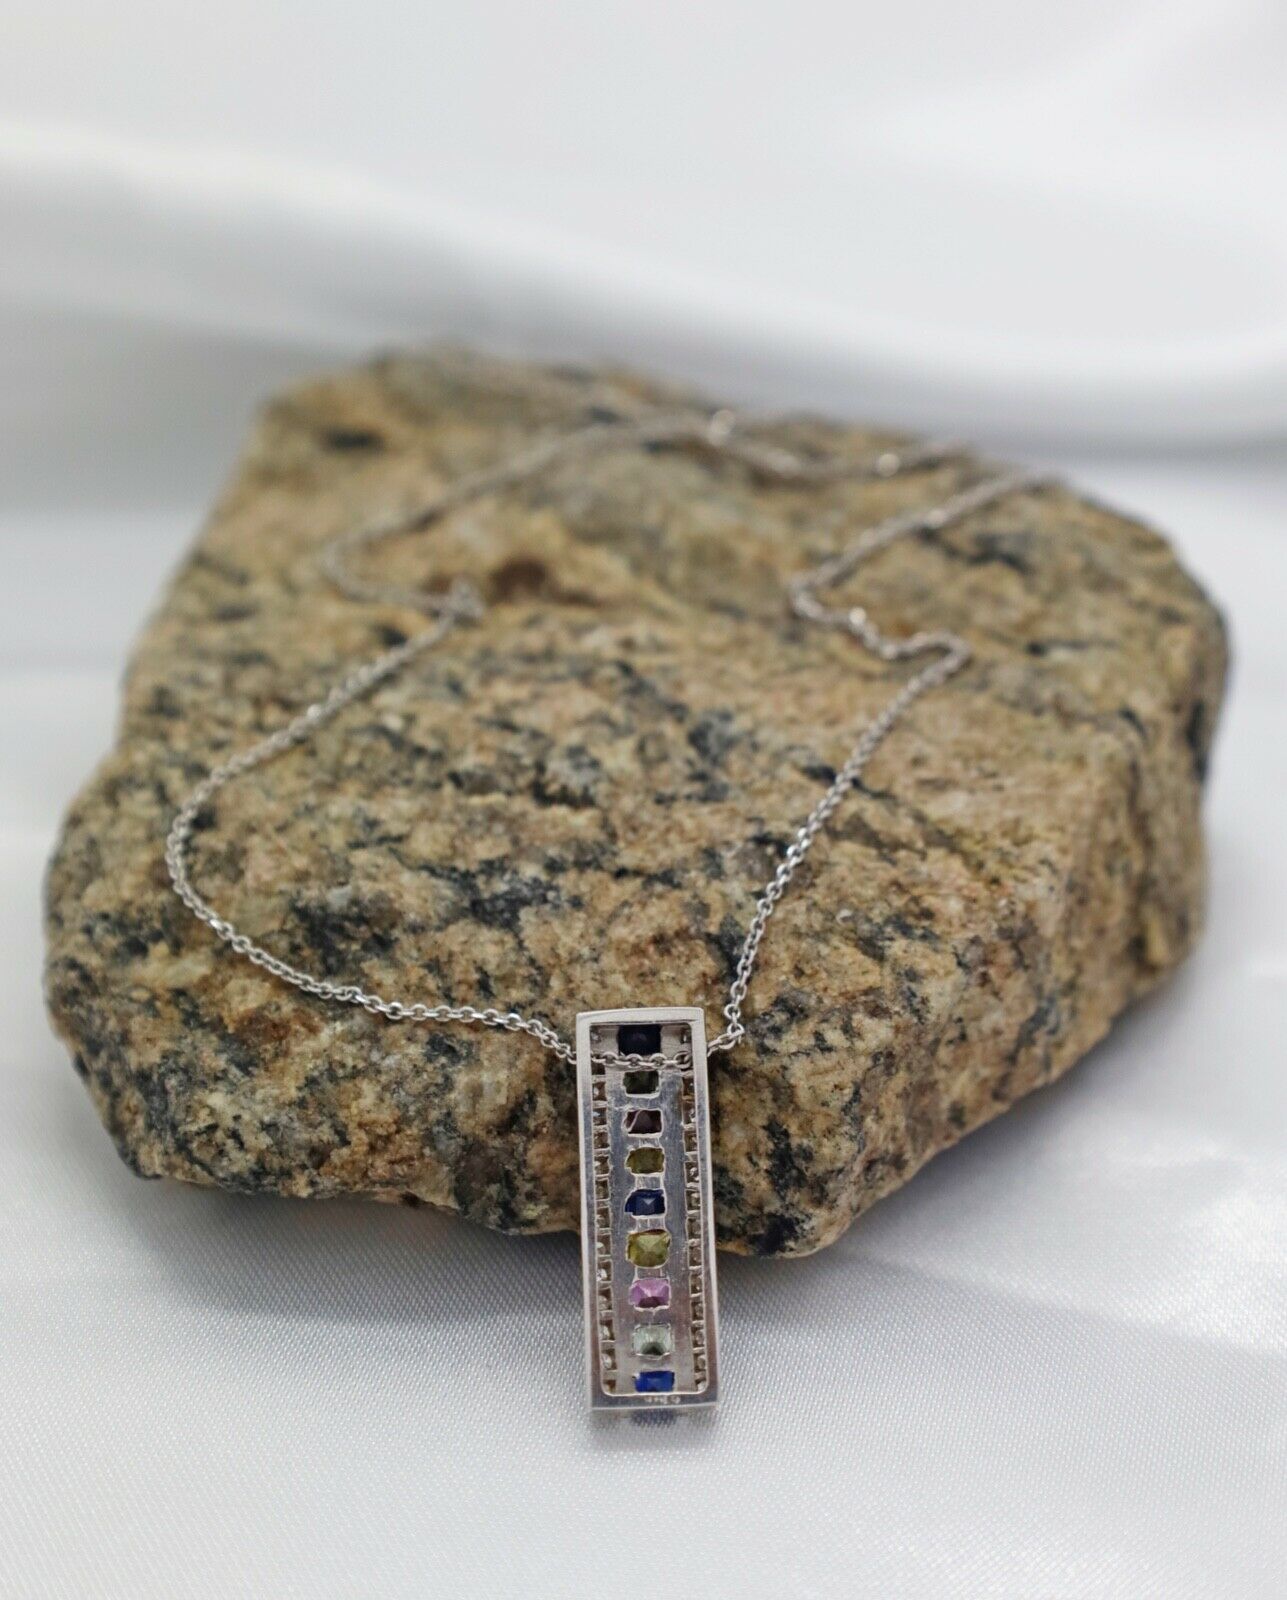 14k White Gold Diamond & Gemstone Pendant Necklace, 18 inches - 5.7g